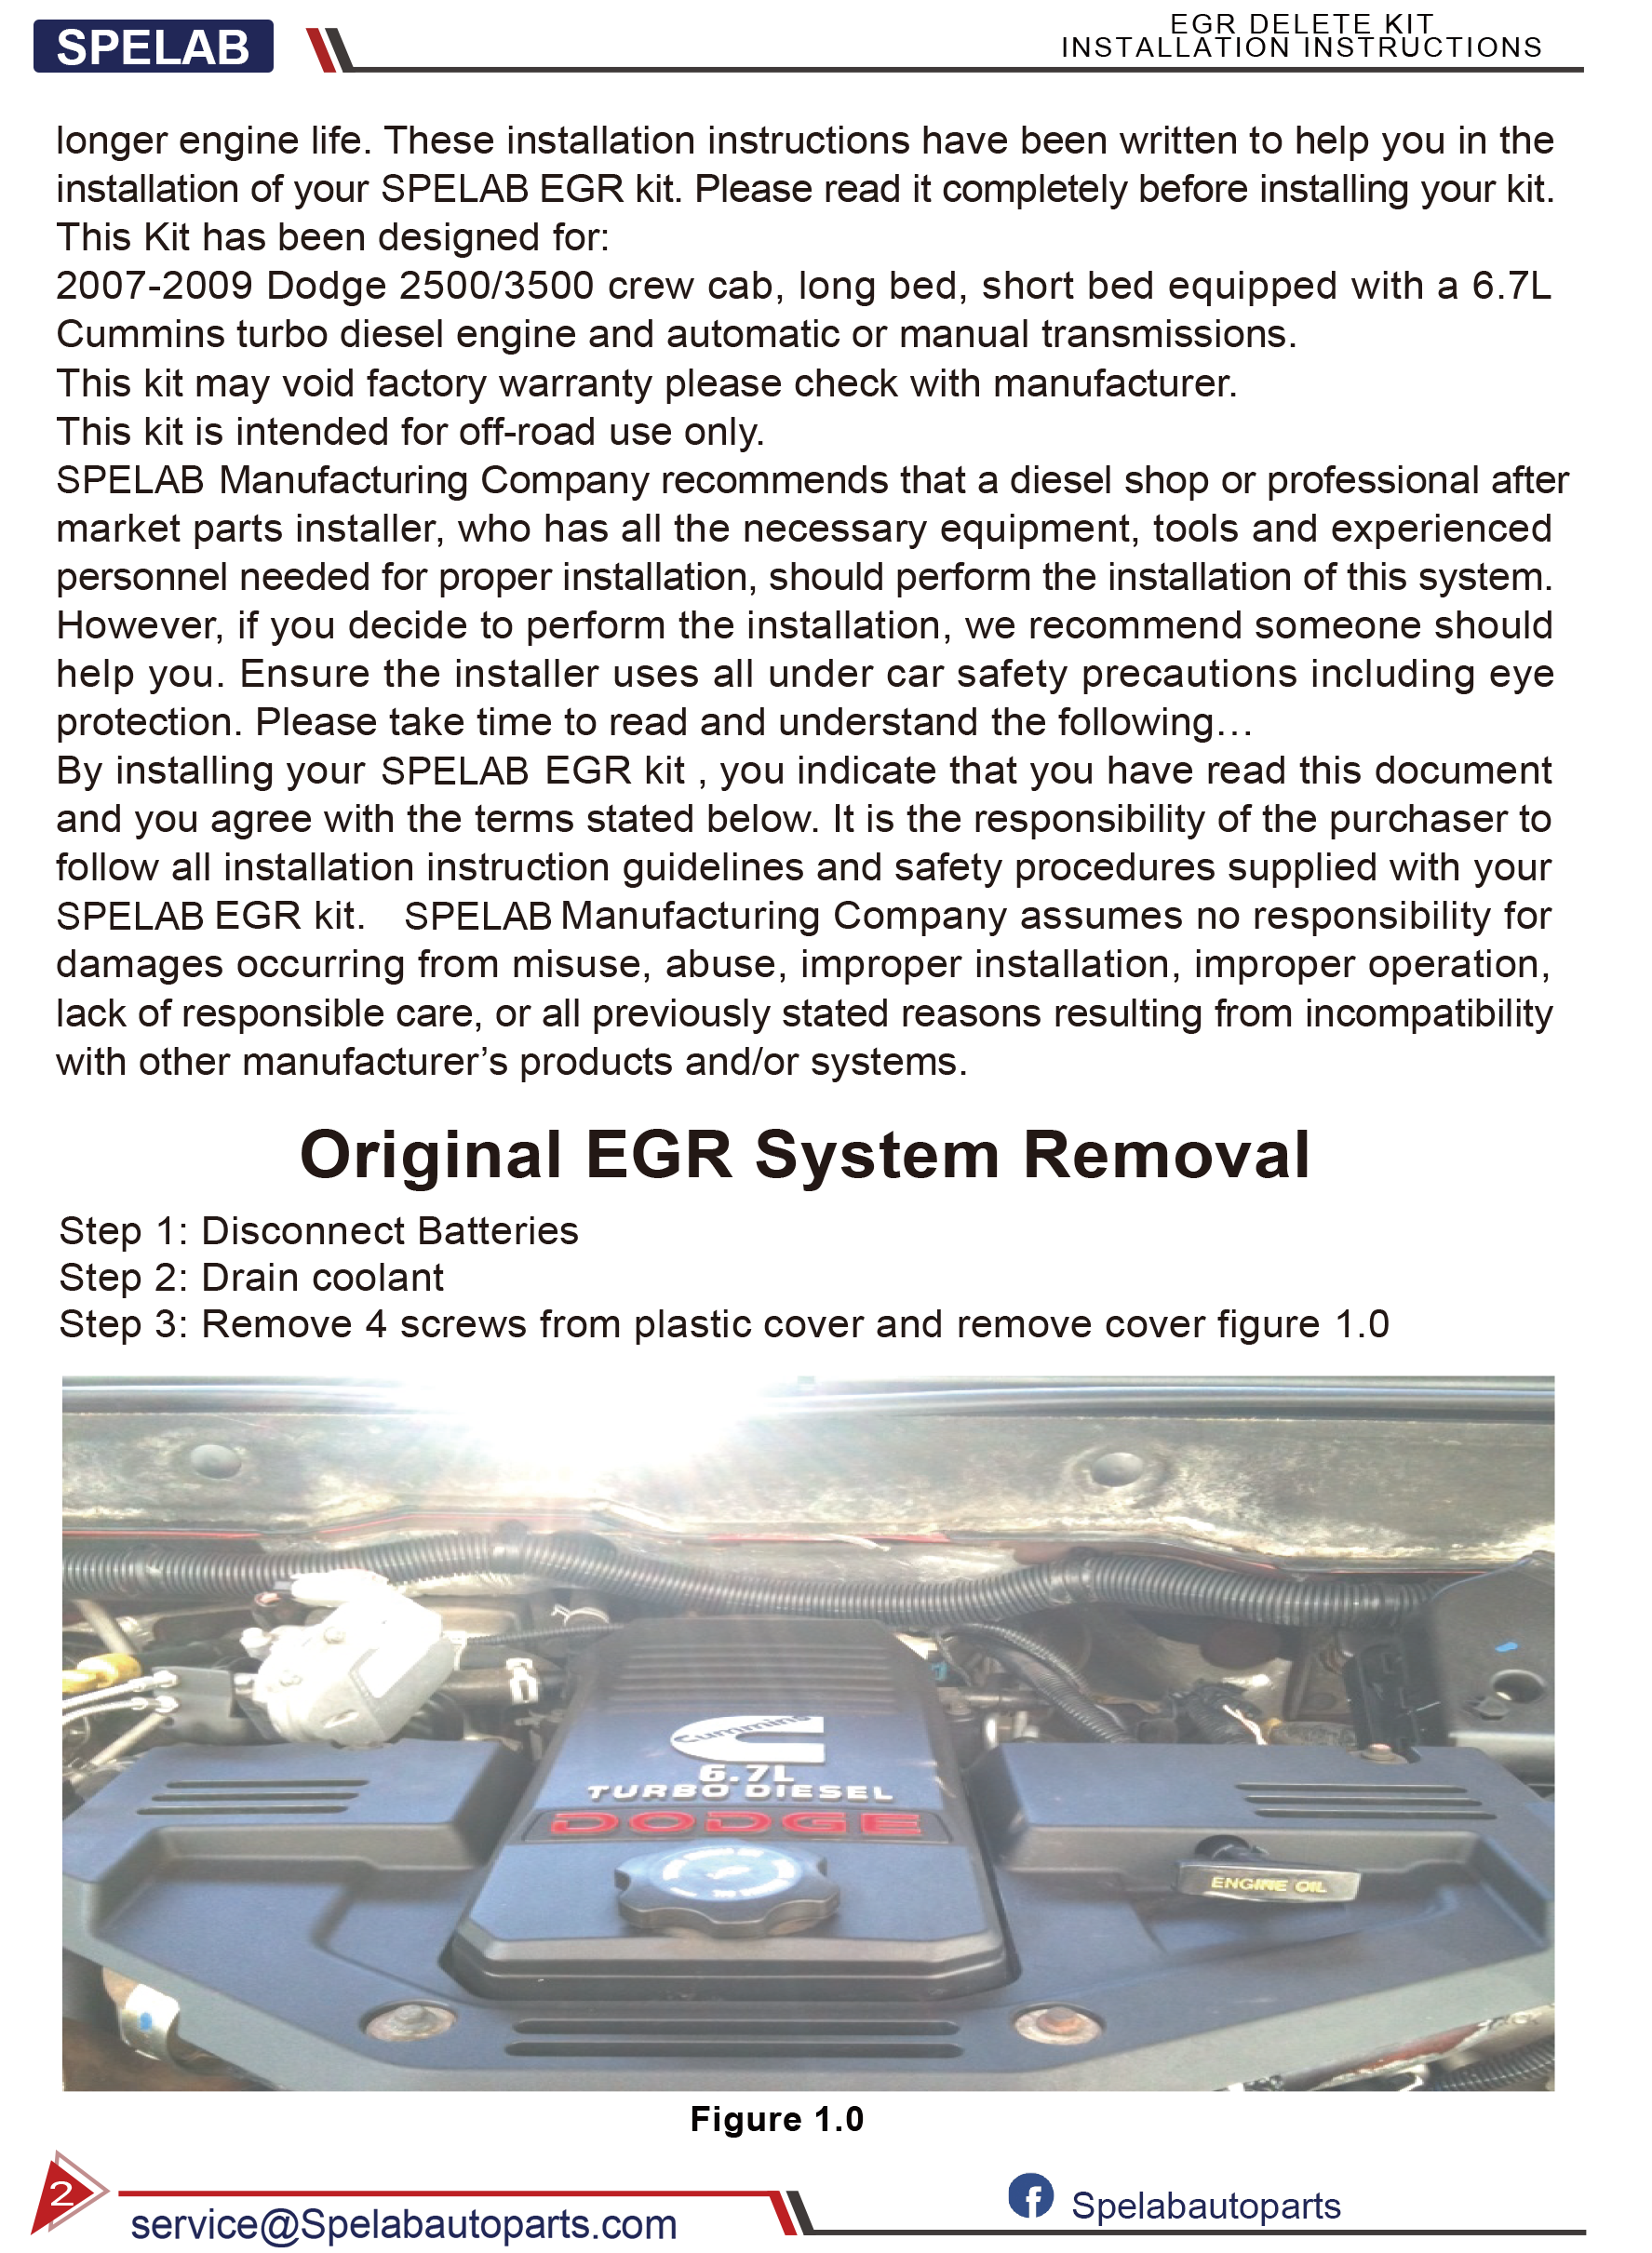 SPELAB 2007-2009 Dodge Ram 6.7L Cummins EGR Cooler Delete Kit Installtion Instruction